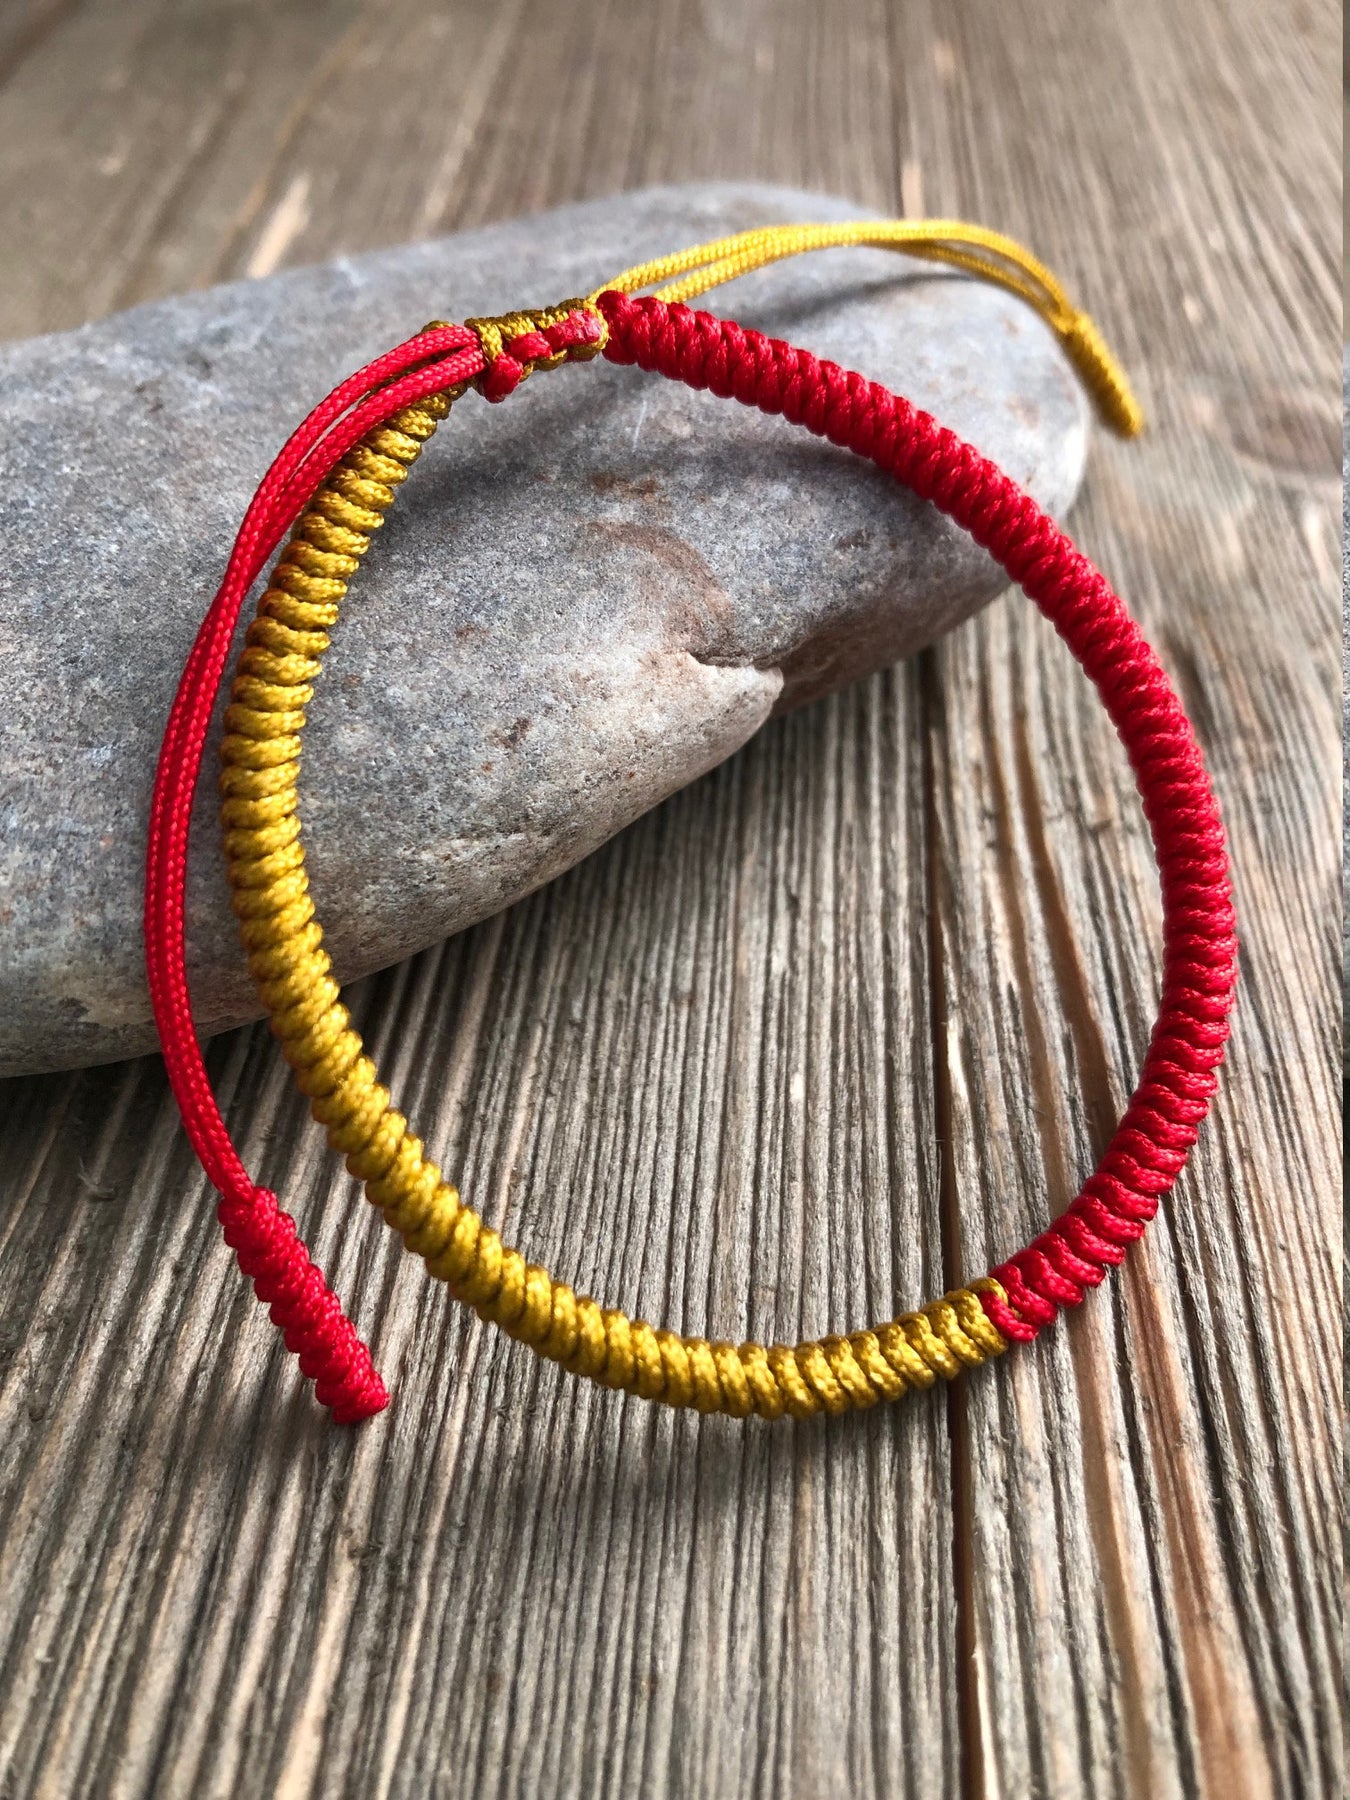 Buy FidgetGear Buddhist Knots Rope Tibetan Buddhist Bracelet Handmade Lucky  Rope Bracelet Luck Deep Red at Amazon.in